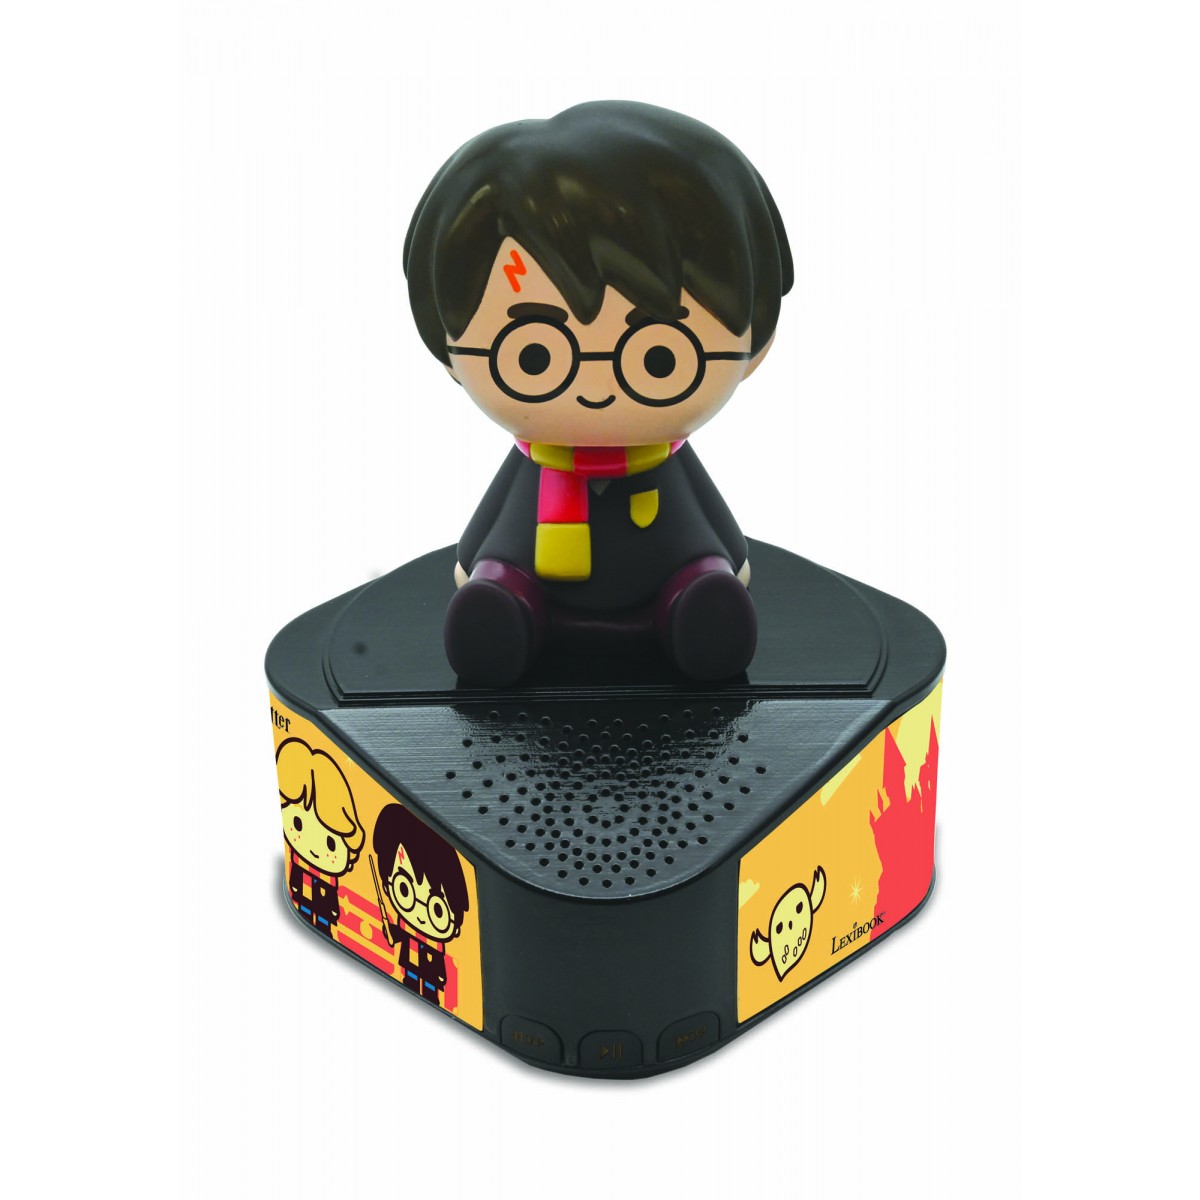 Harry Potter Speaker, Luminous figurine